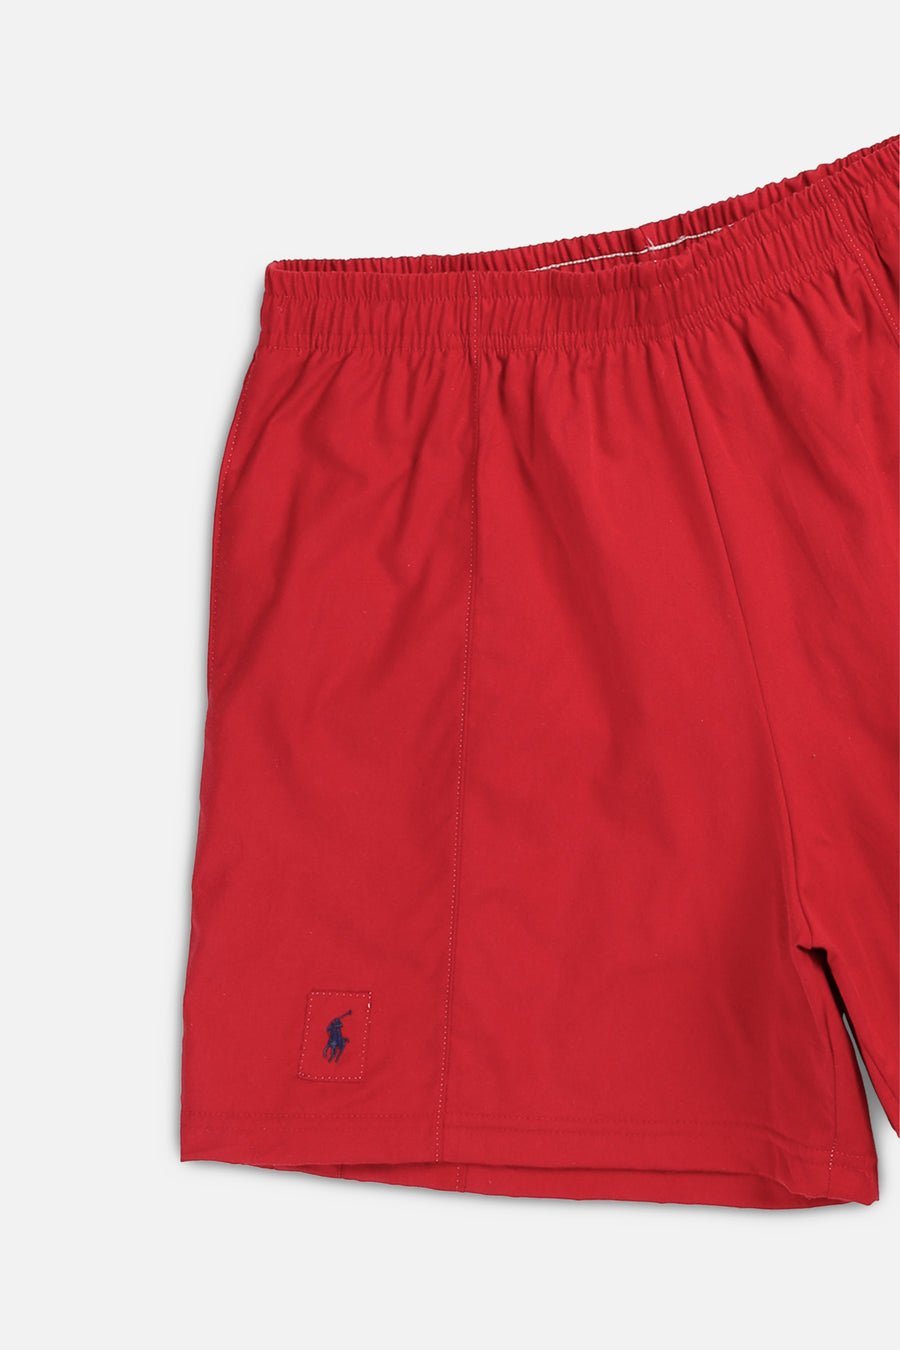 Unisex Rework Oxford Boxer Shorts - XS, S, M, L, XL